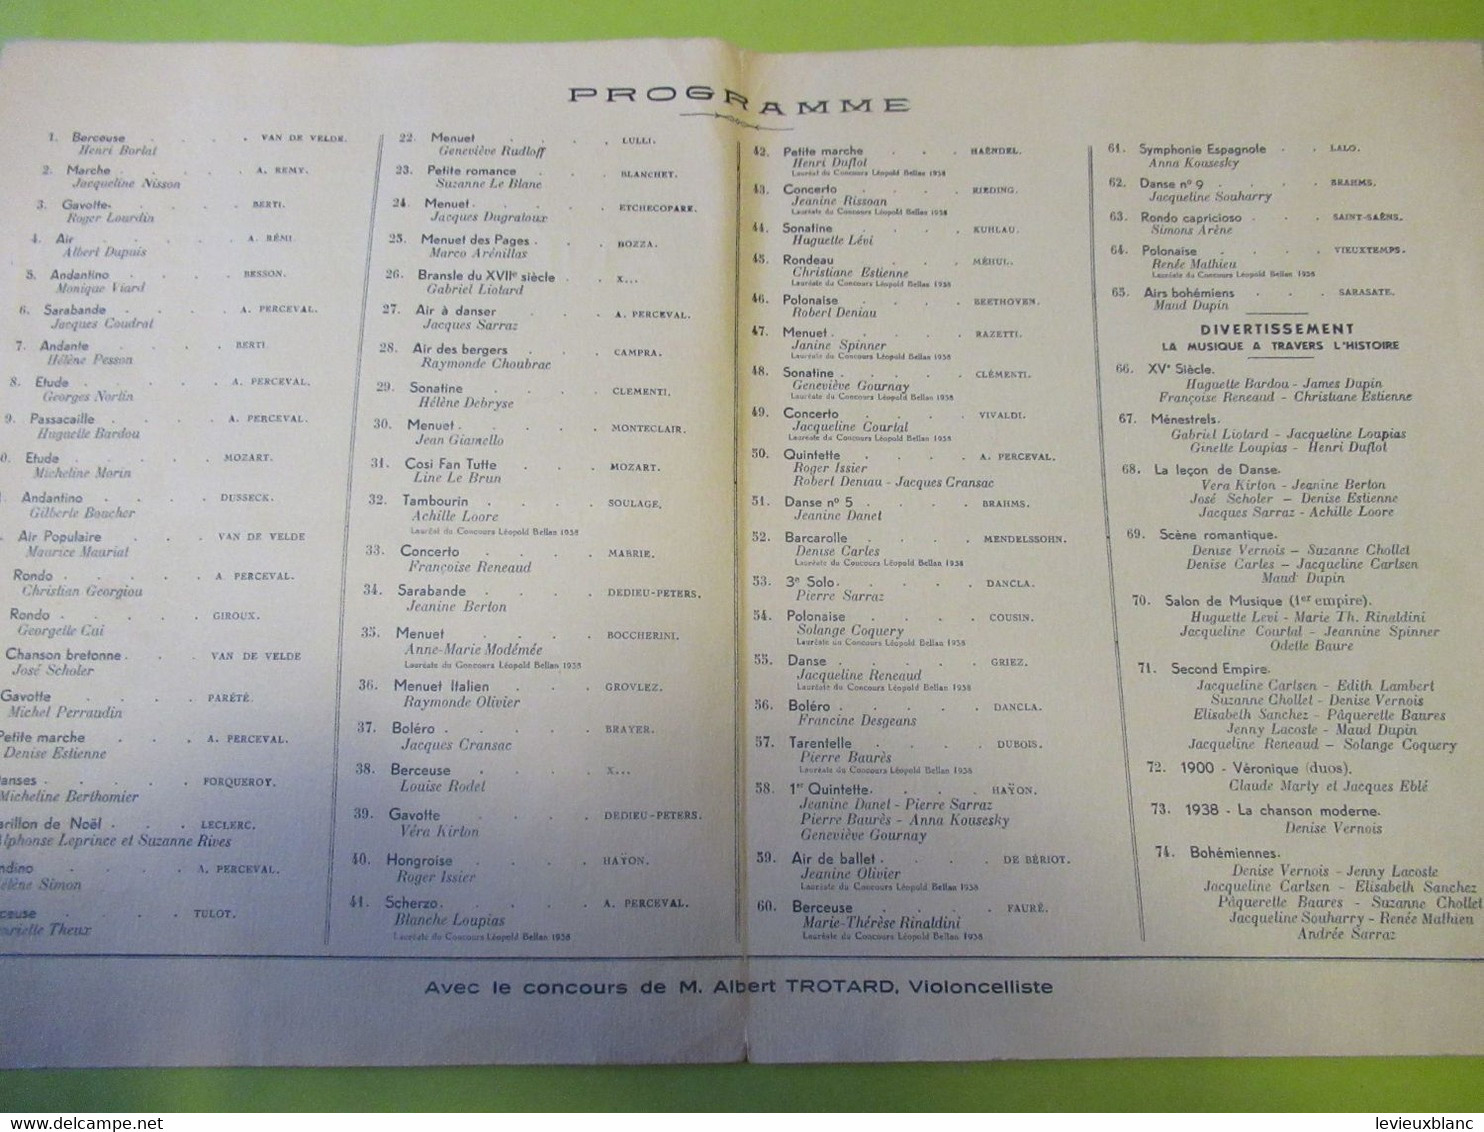 Programme/Audition Annuelle/André PERCEVAL Violoniste/Salle De La Concorde/M.Perceval Cantatrice/1938       PART315 - Altri & Non Classificati